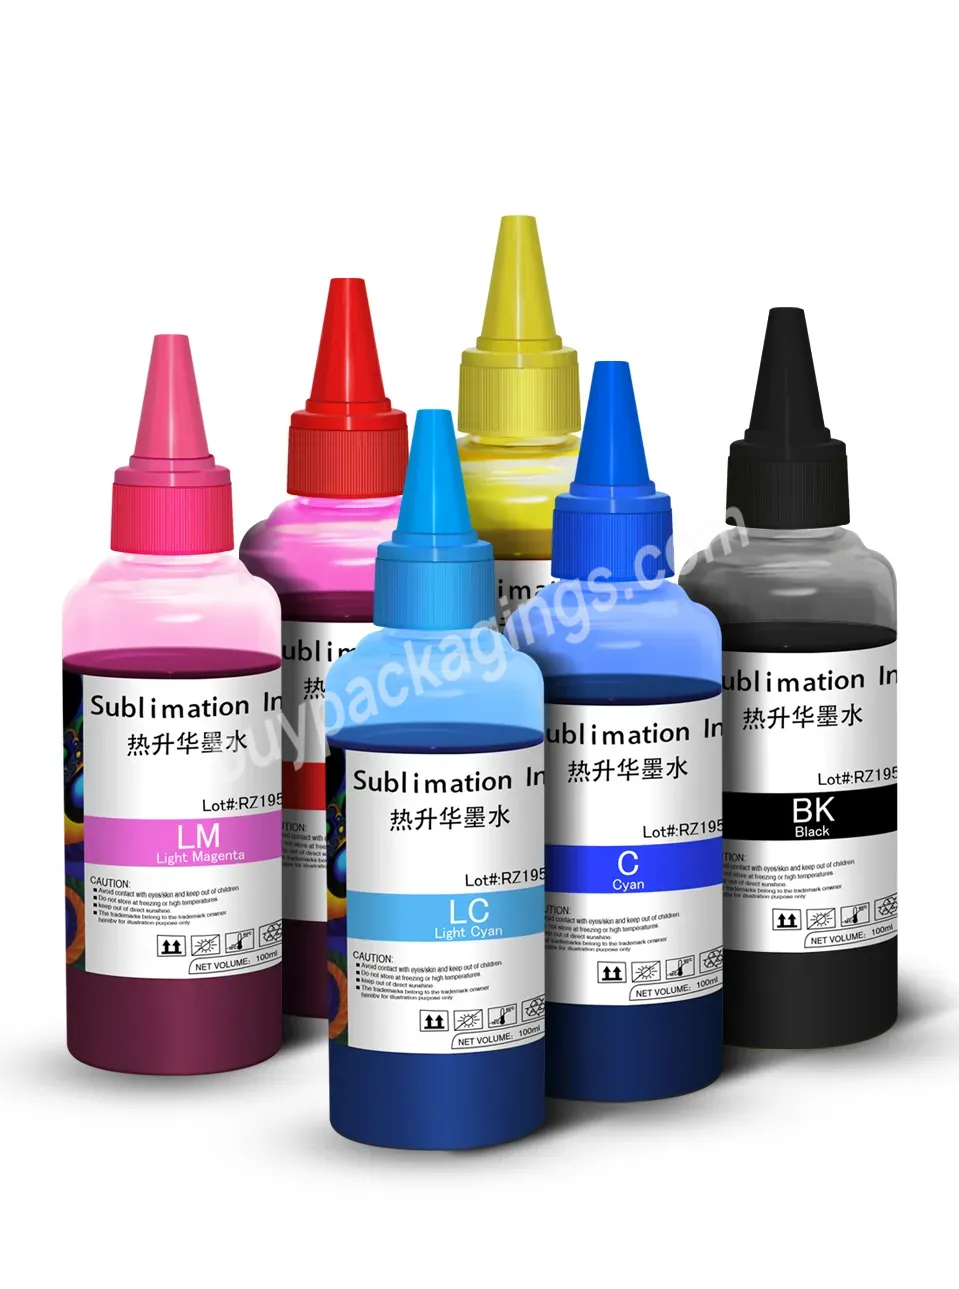 Factory Price 100ml/bottle Sublimation Dye Ink For Dx5 Dx7 Dx6 5113 4720 I3200 Inkjet Printer Ink Refill Kits - Buy Sublimation Dye Ink For Ep,For Ep Dx5 Printer,For Ep I3200.